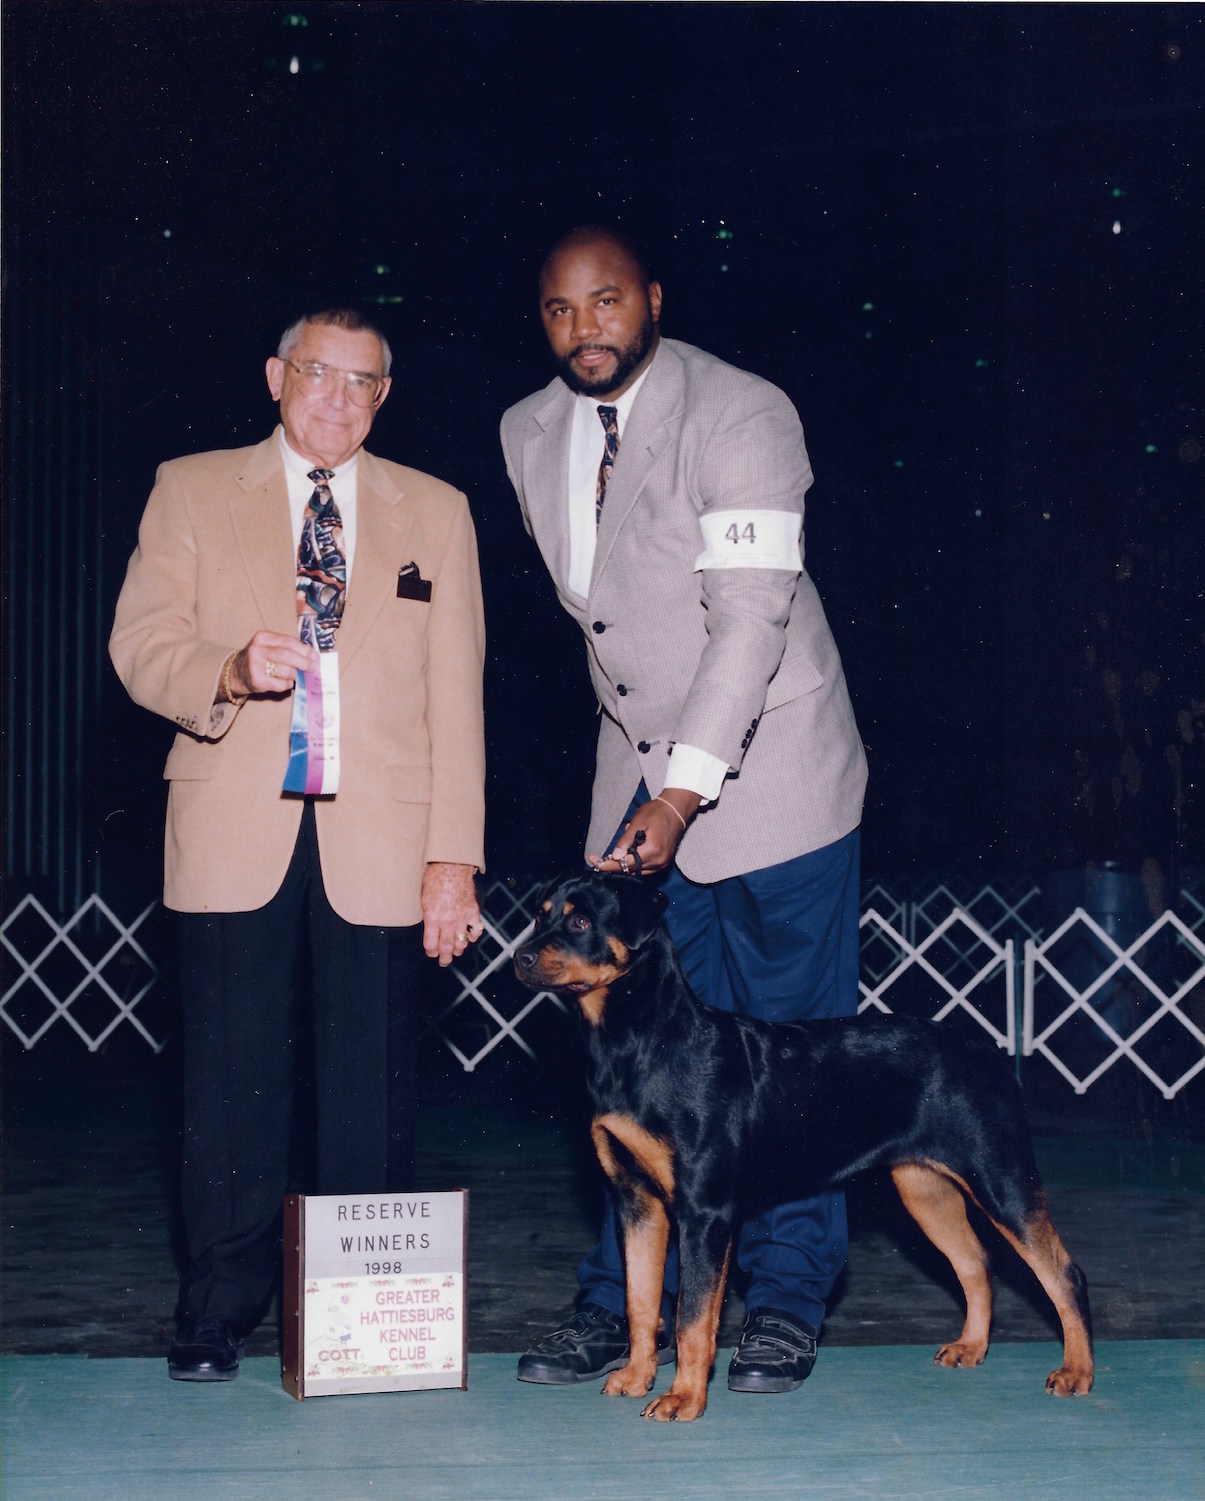 Acea, Reserve Winners, 1998, Greater Hattiesburg Kennel Club